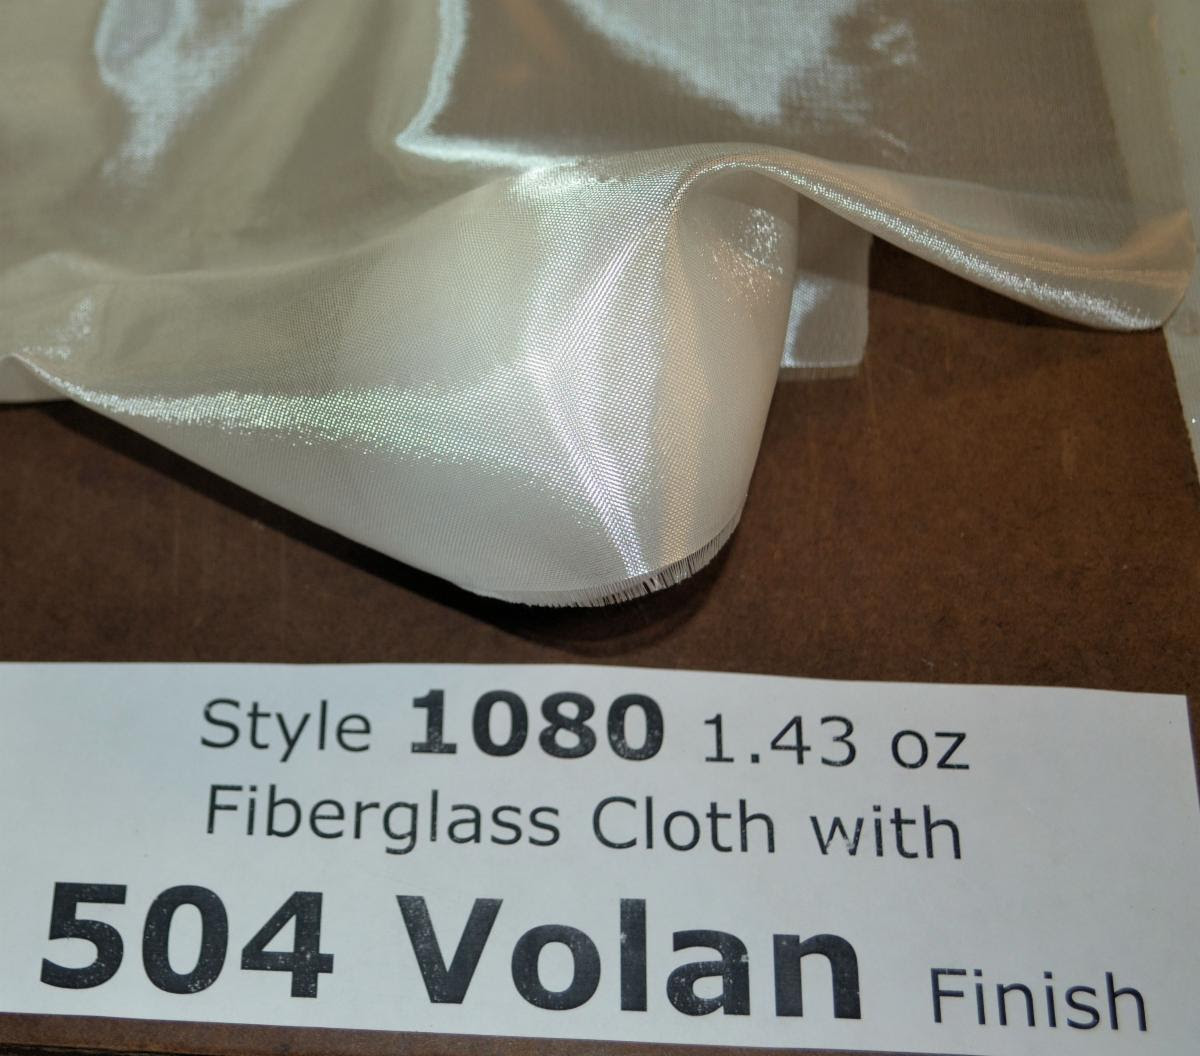 Style 1080 1.43 oz fiberglass cloth with 504 Volan finish